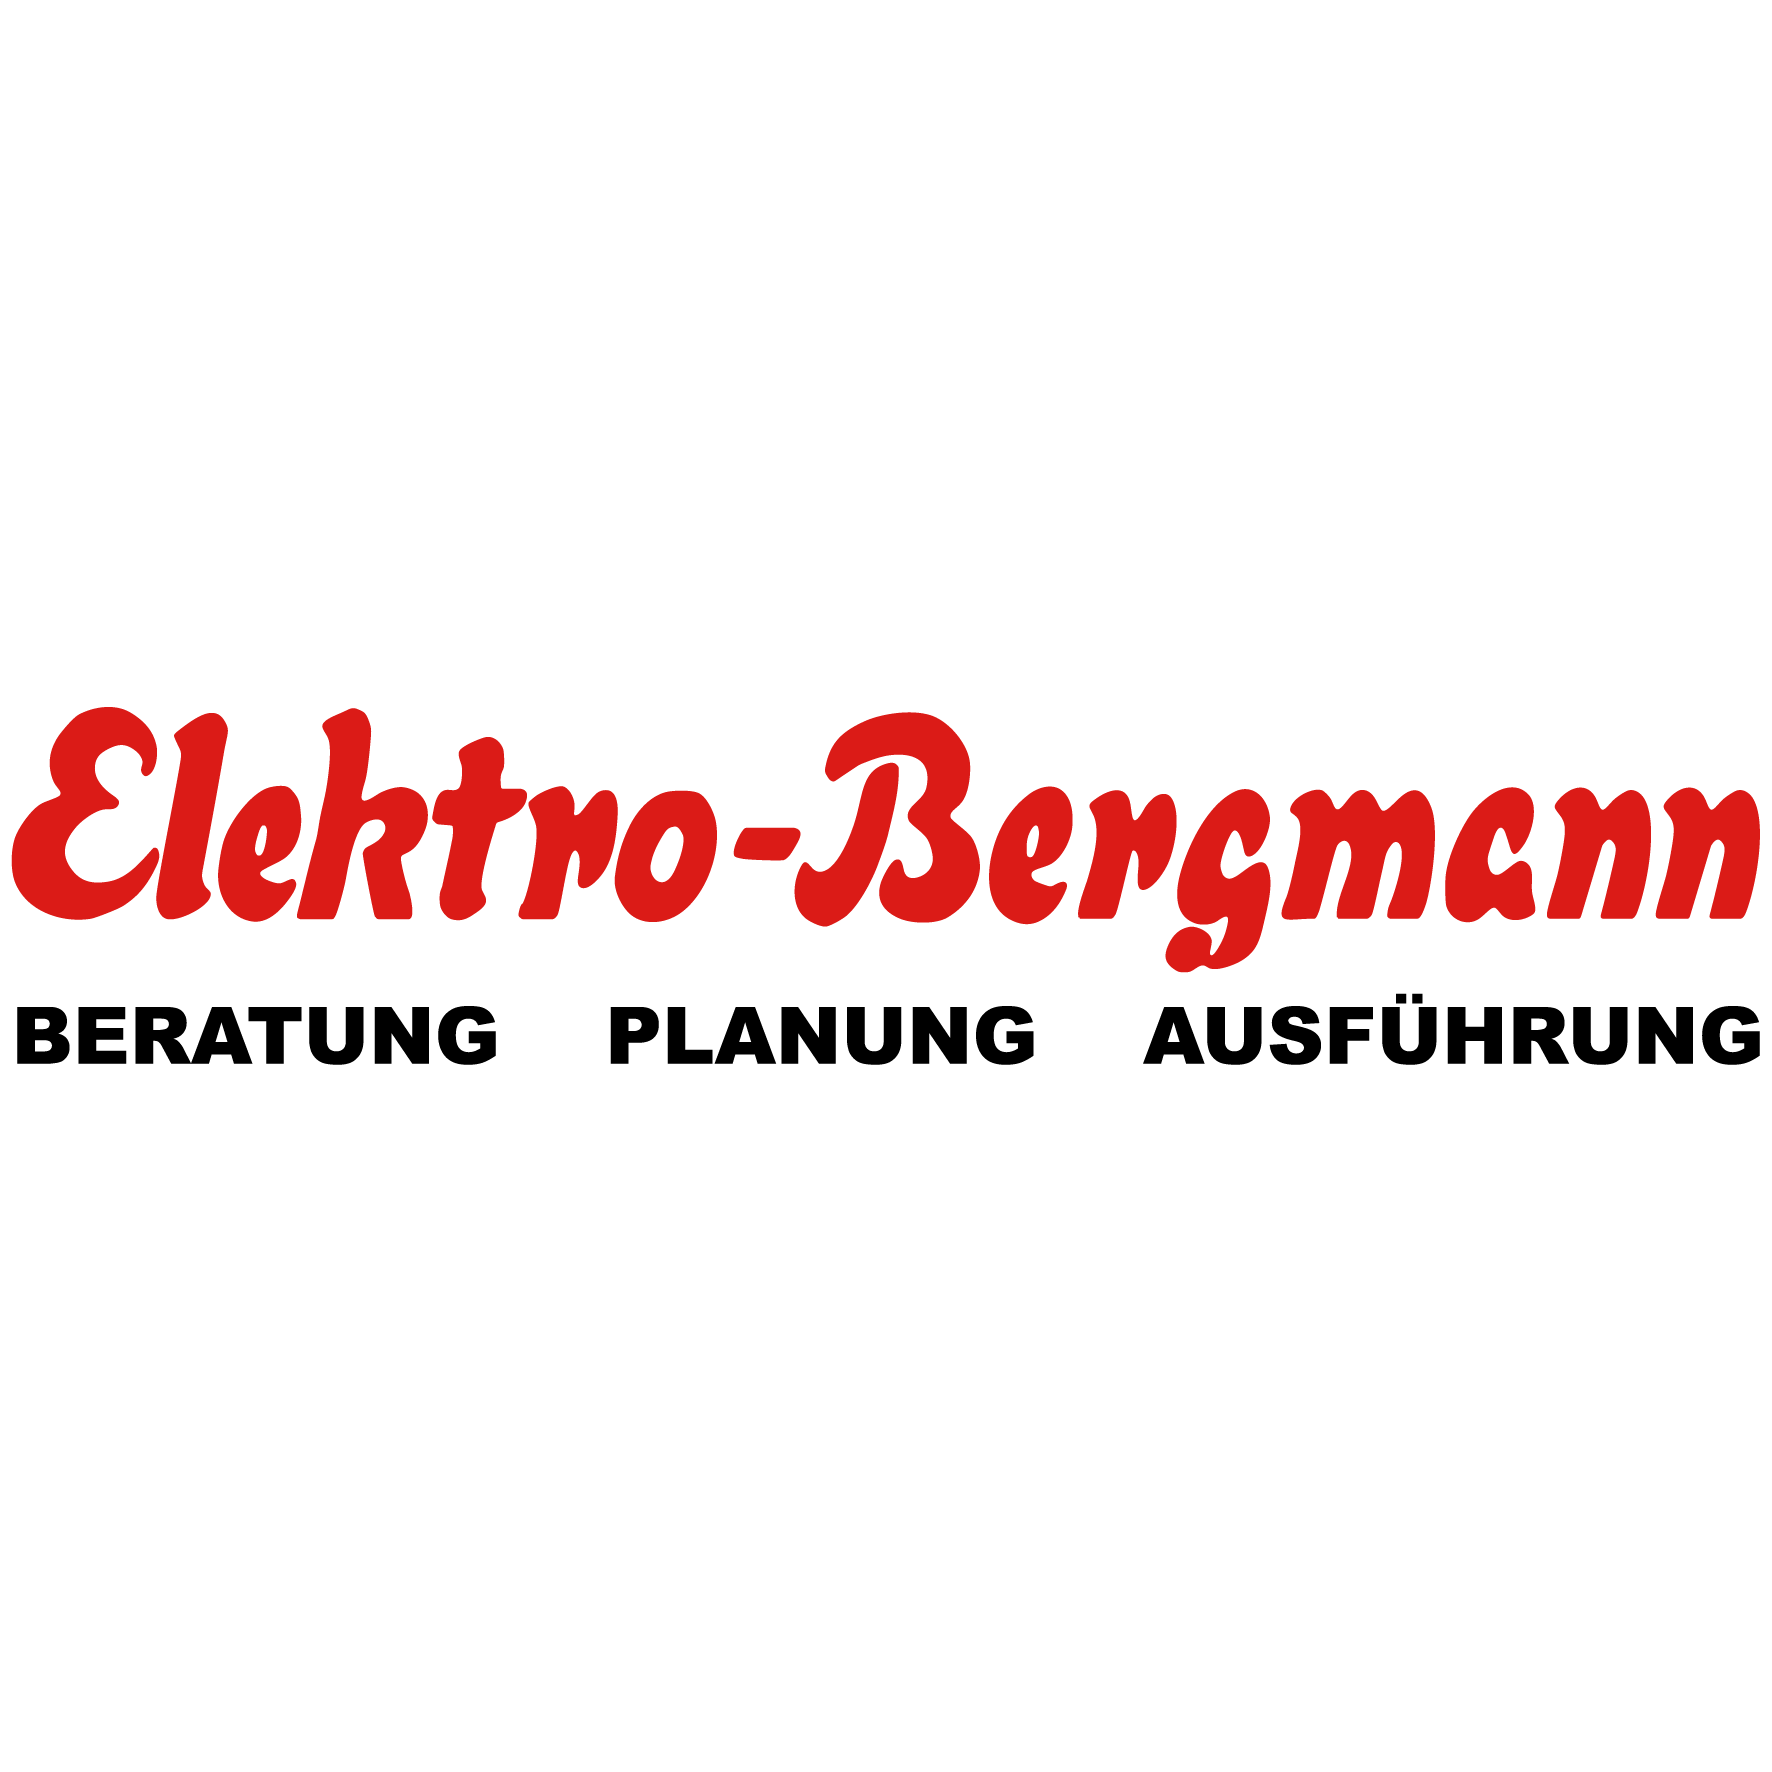 ELEKTRO-BERGMANN GMBH Logo